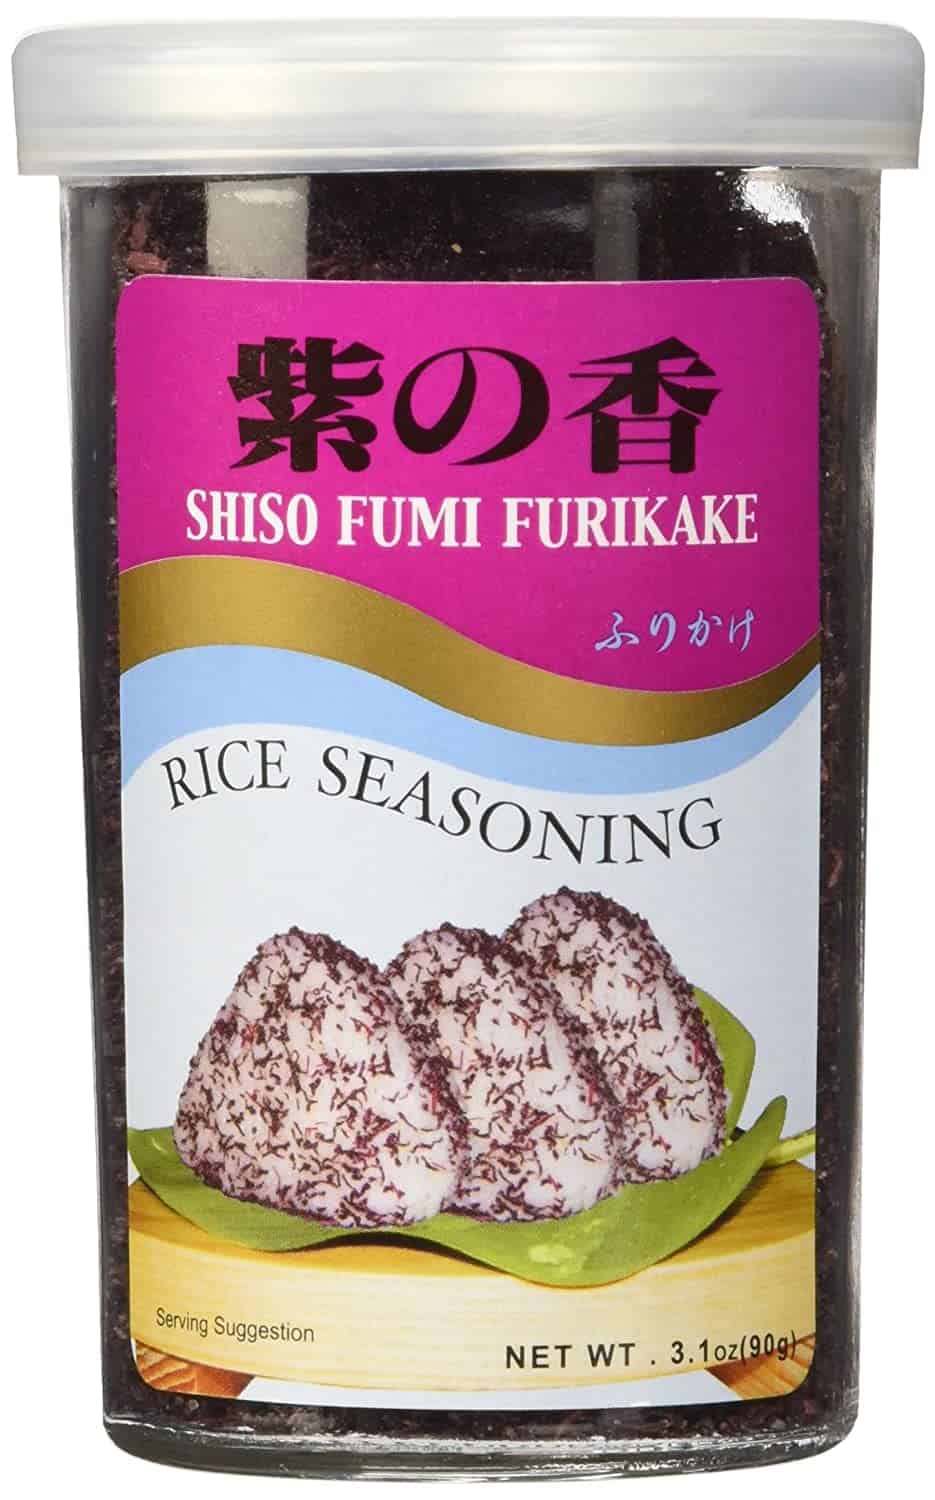 Shiso fumi furikake JFC